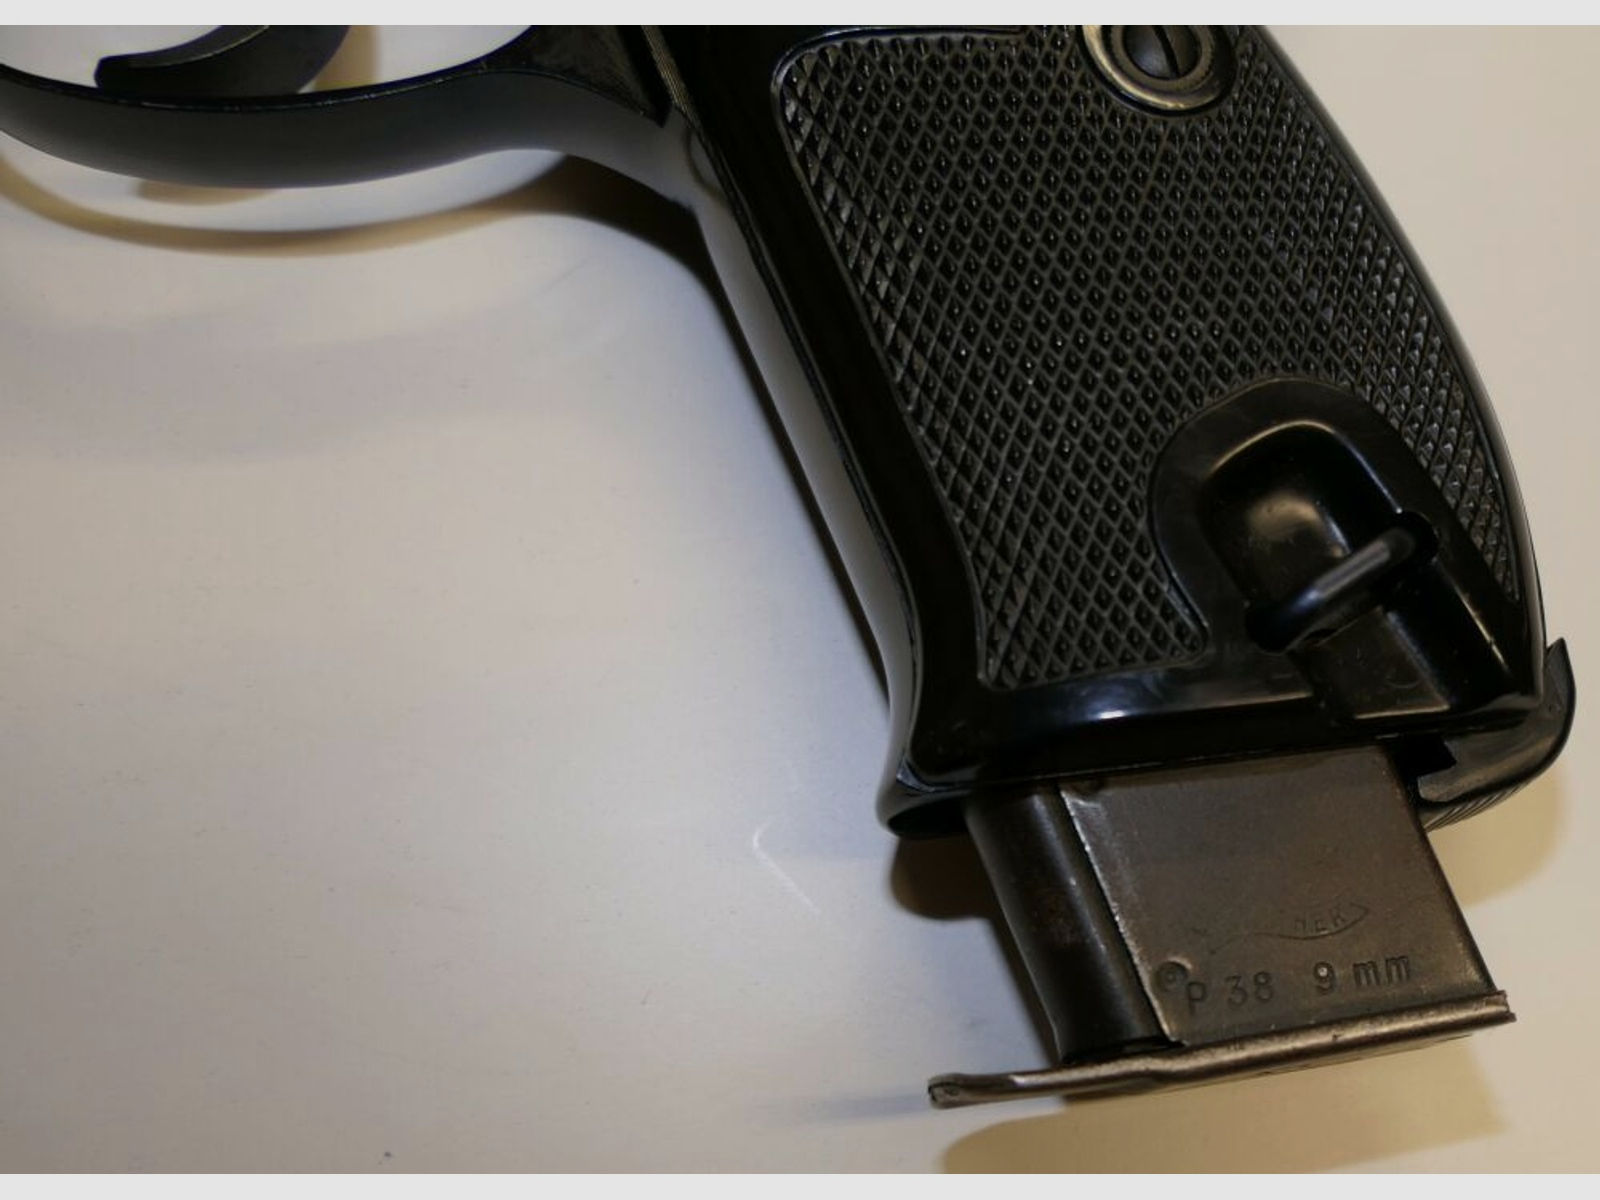 Walther	 Pistole Walther P38 im Kaliber 9mm Para Inkl. Zubehör